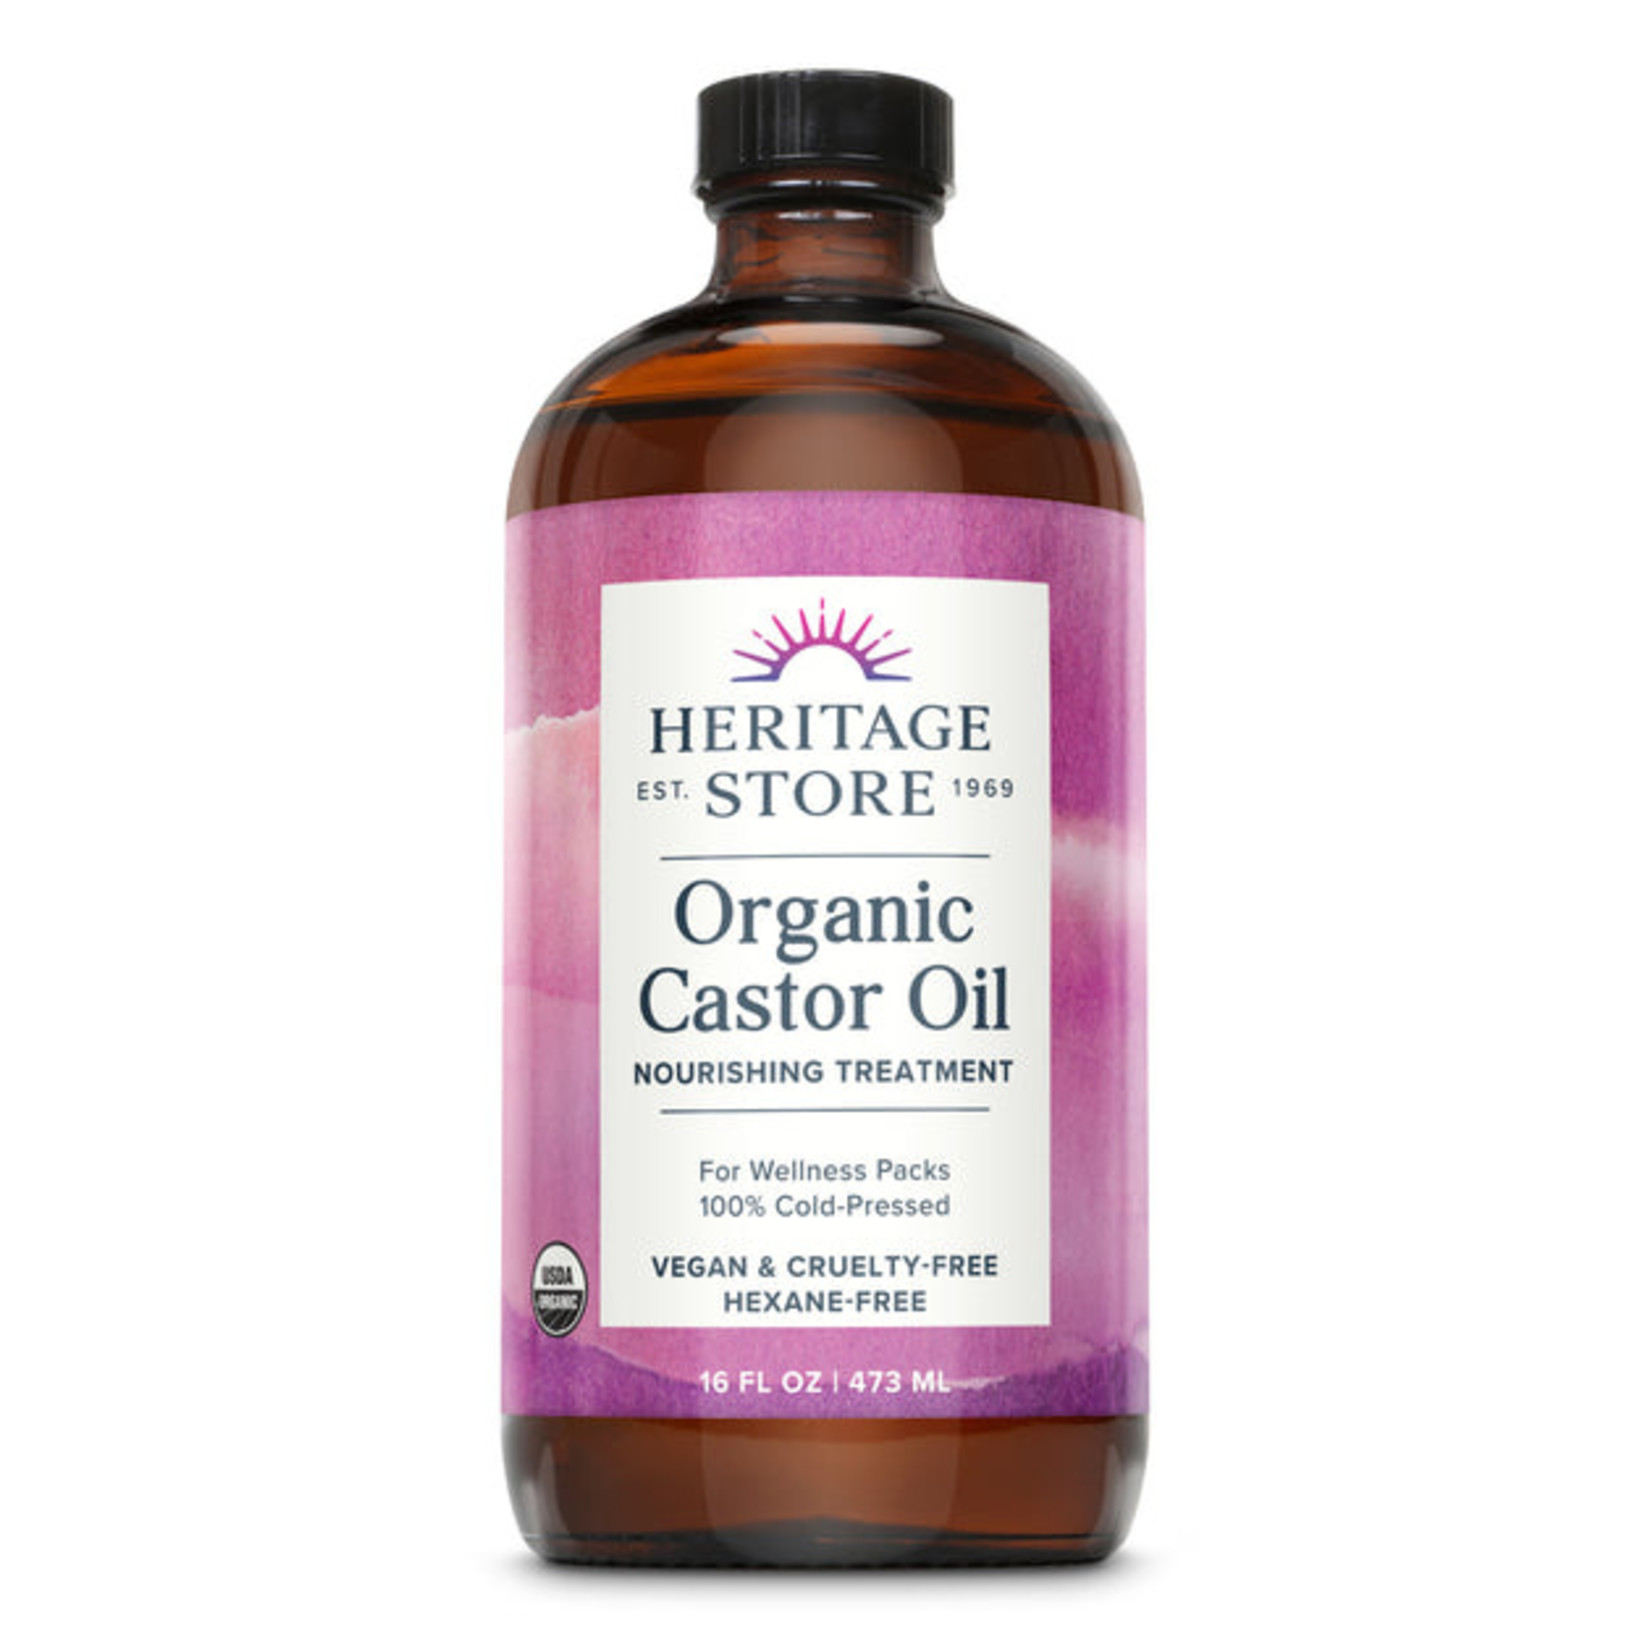 Heritage Store Heritage Store - Organic Castor Oil - 16 fl oz